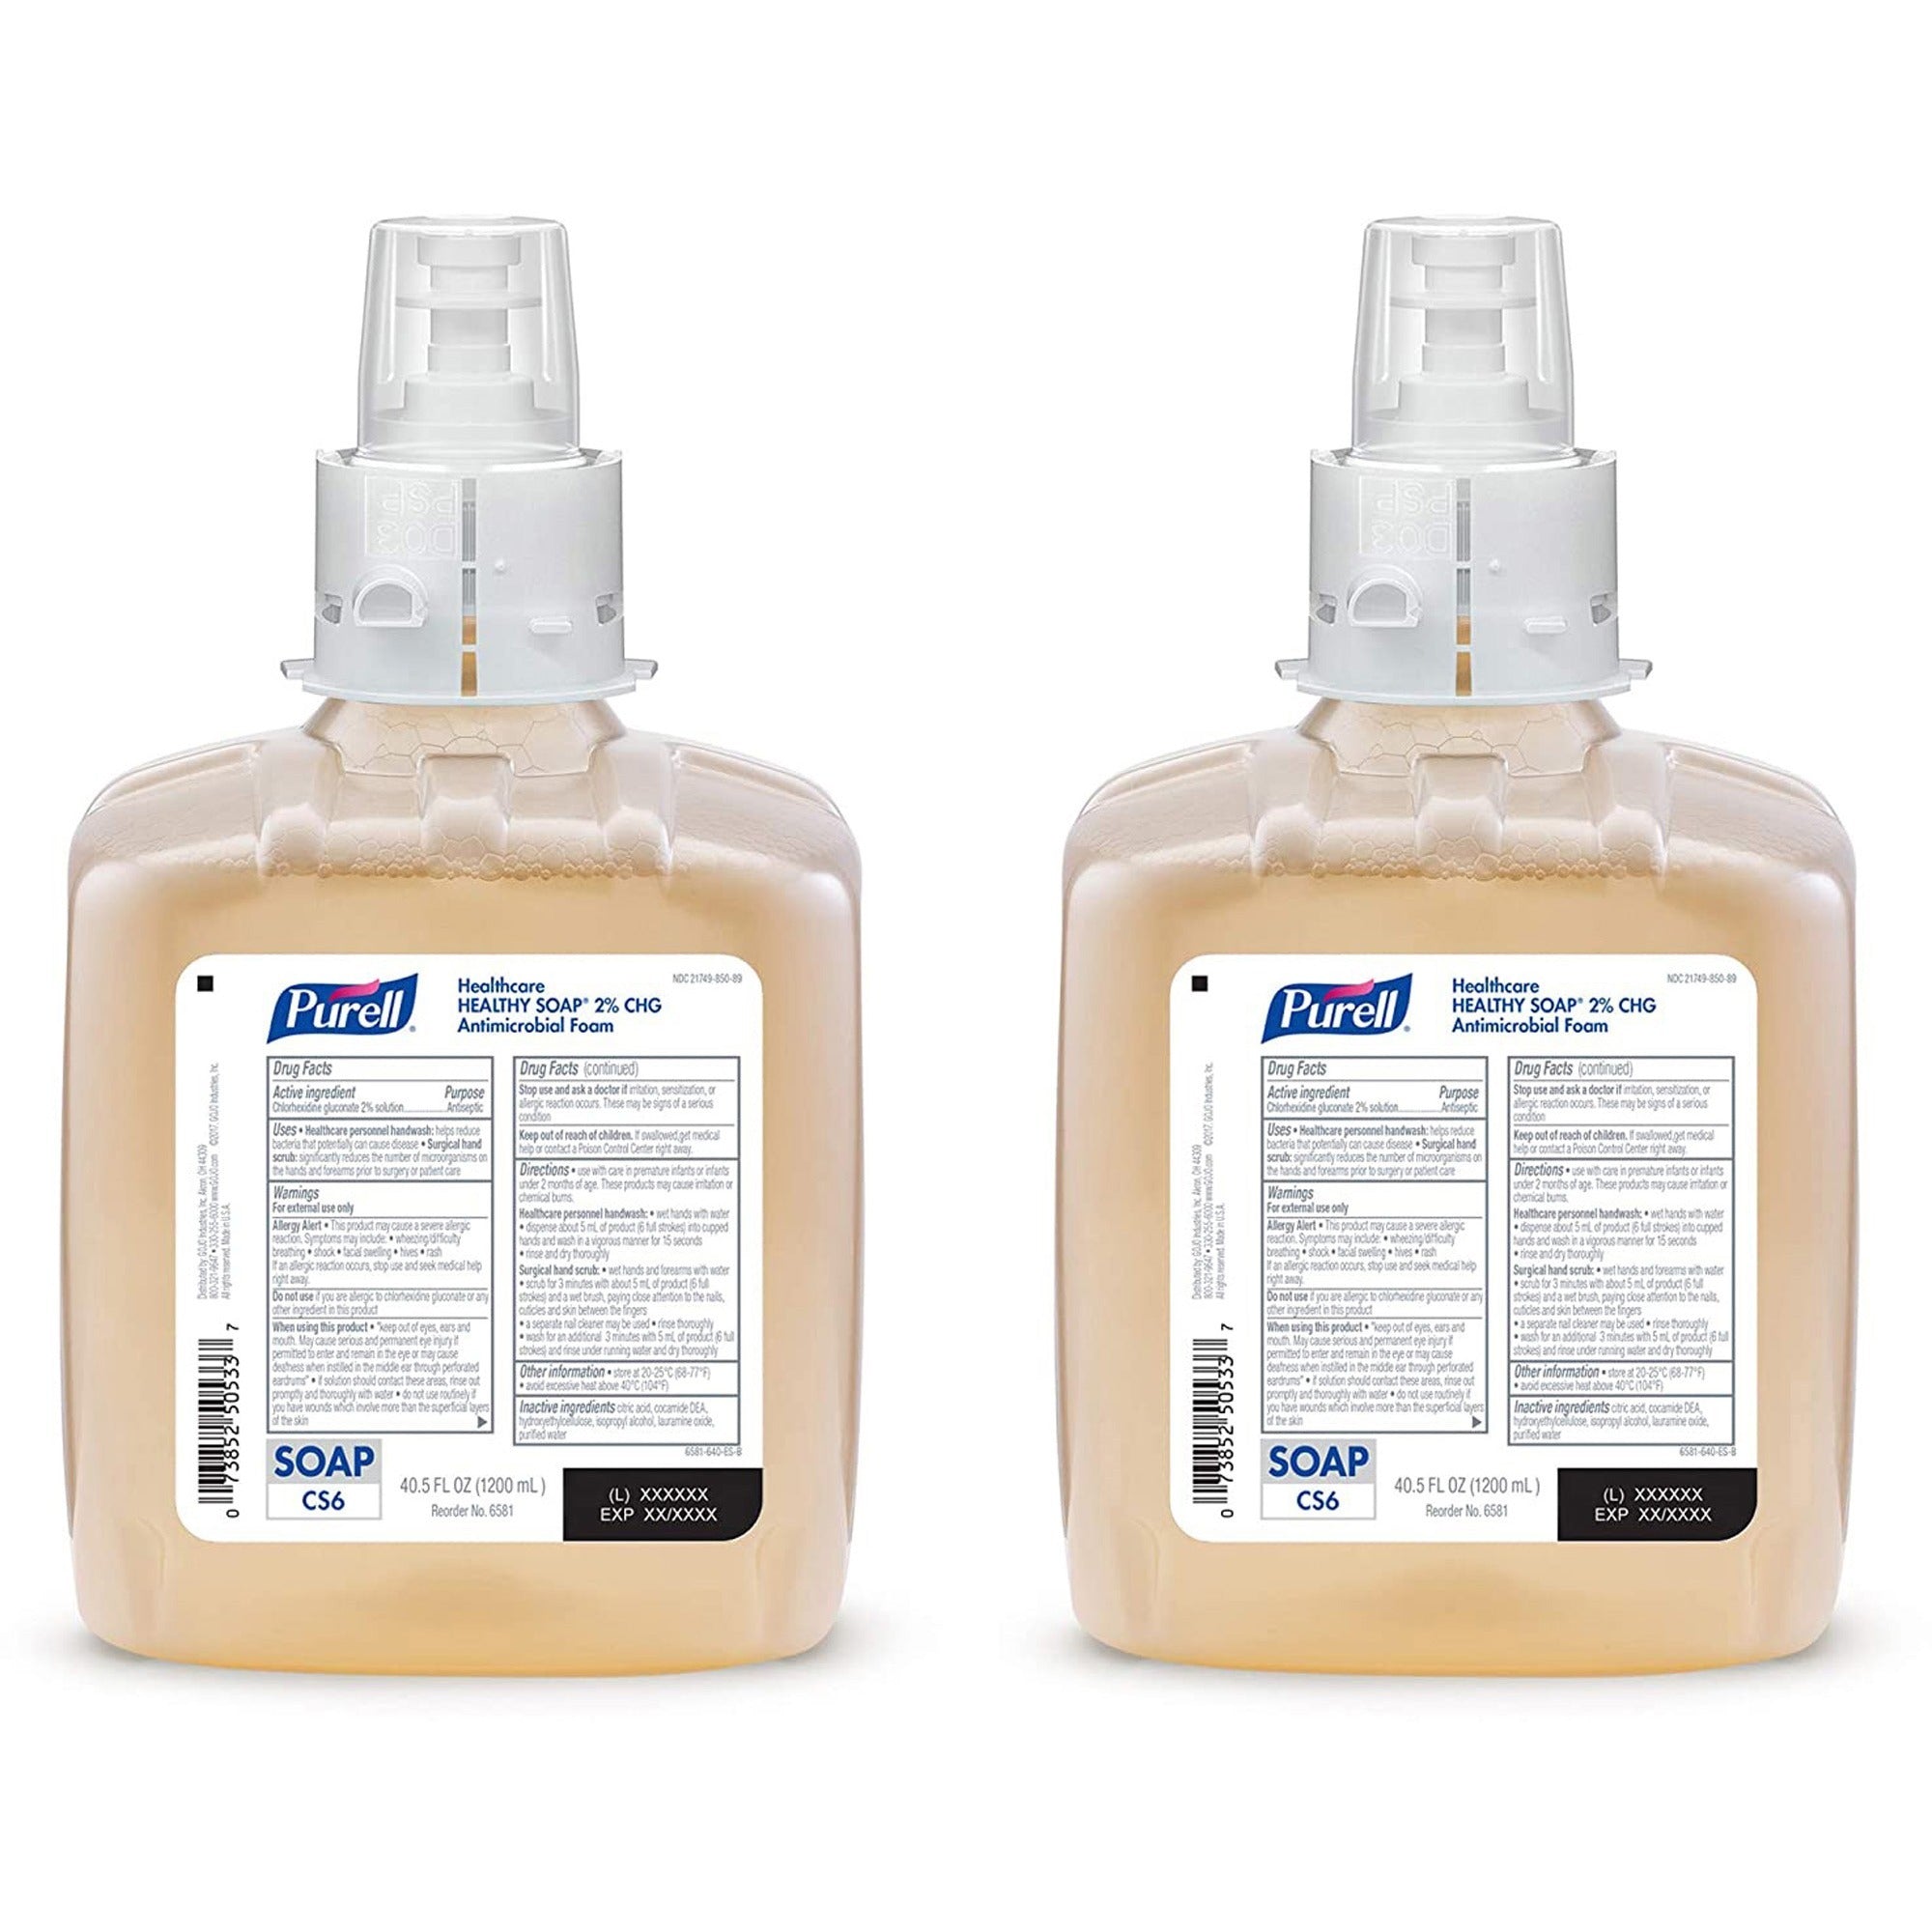 purell-cs6-healthcare-healthy-soap-2%-chg-antimicrobial-foam-423-fl-oz-1250-ml-kill-germs-bacteria-remover-hand-hospital-healthcare-skin-moisturizing-non-irritating-dye-free-fragrance-free-hygienic-rich-lather-2-carton_goj658102 - 1